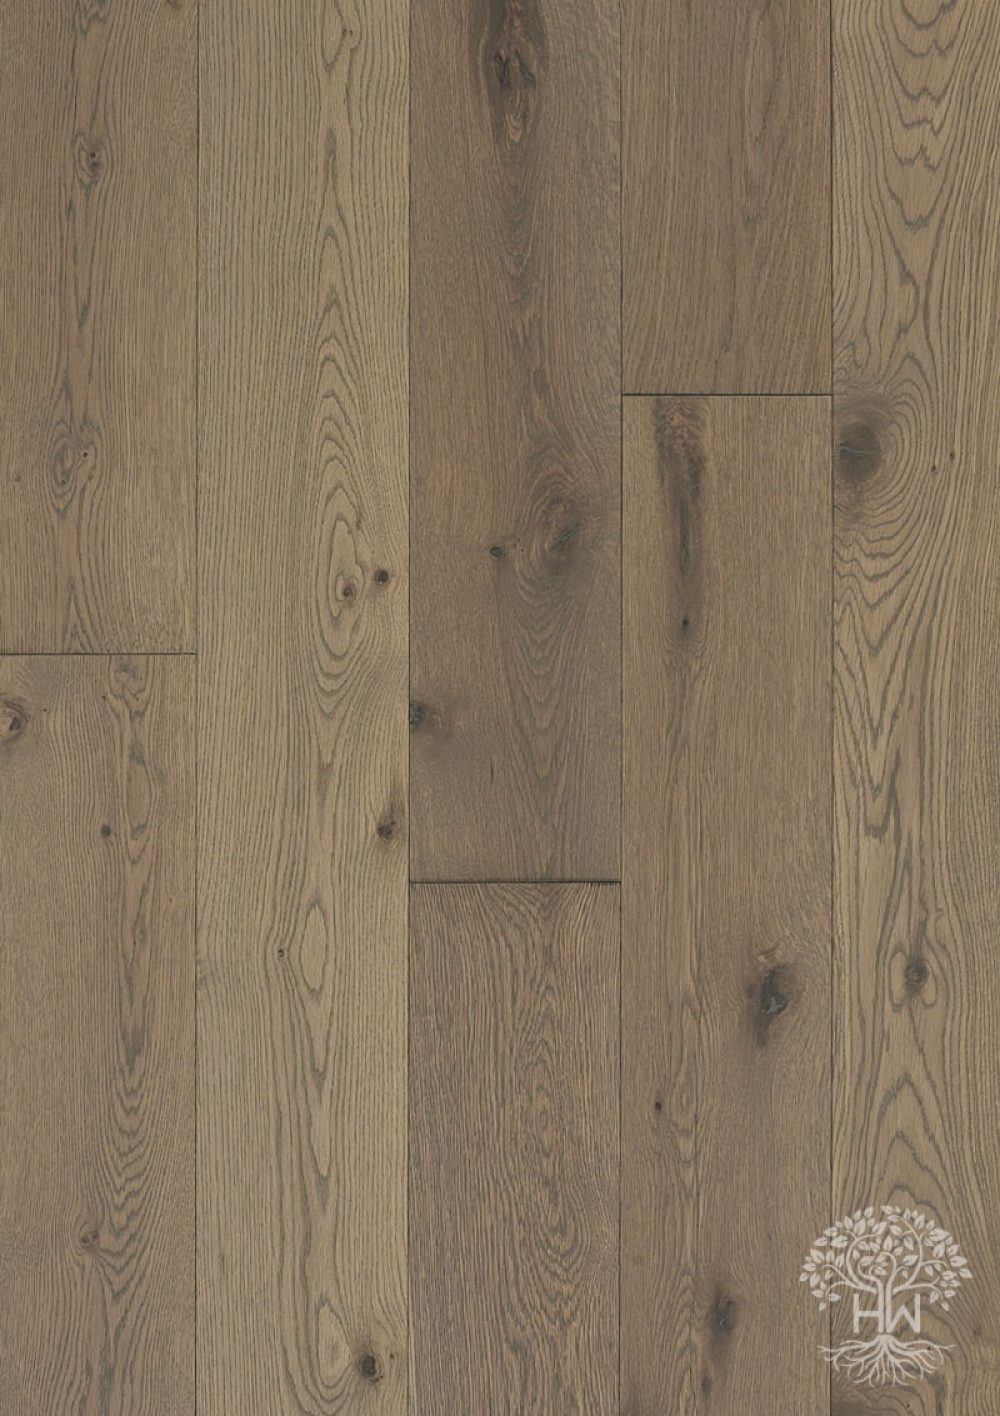 Graceful Grey Hardwood Flooring, Sheoga Hardwood Flooring Graceful Collection